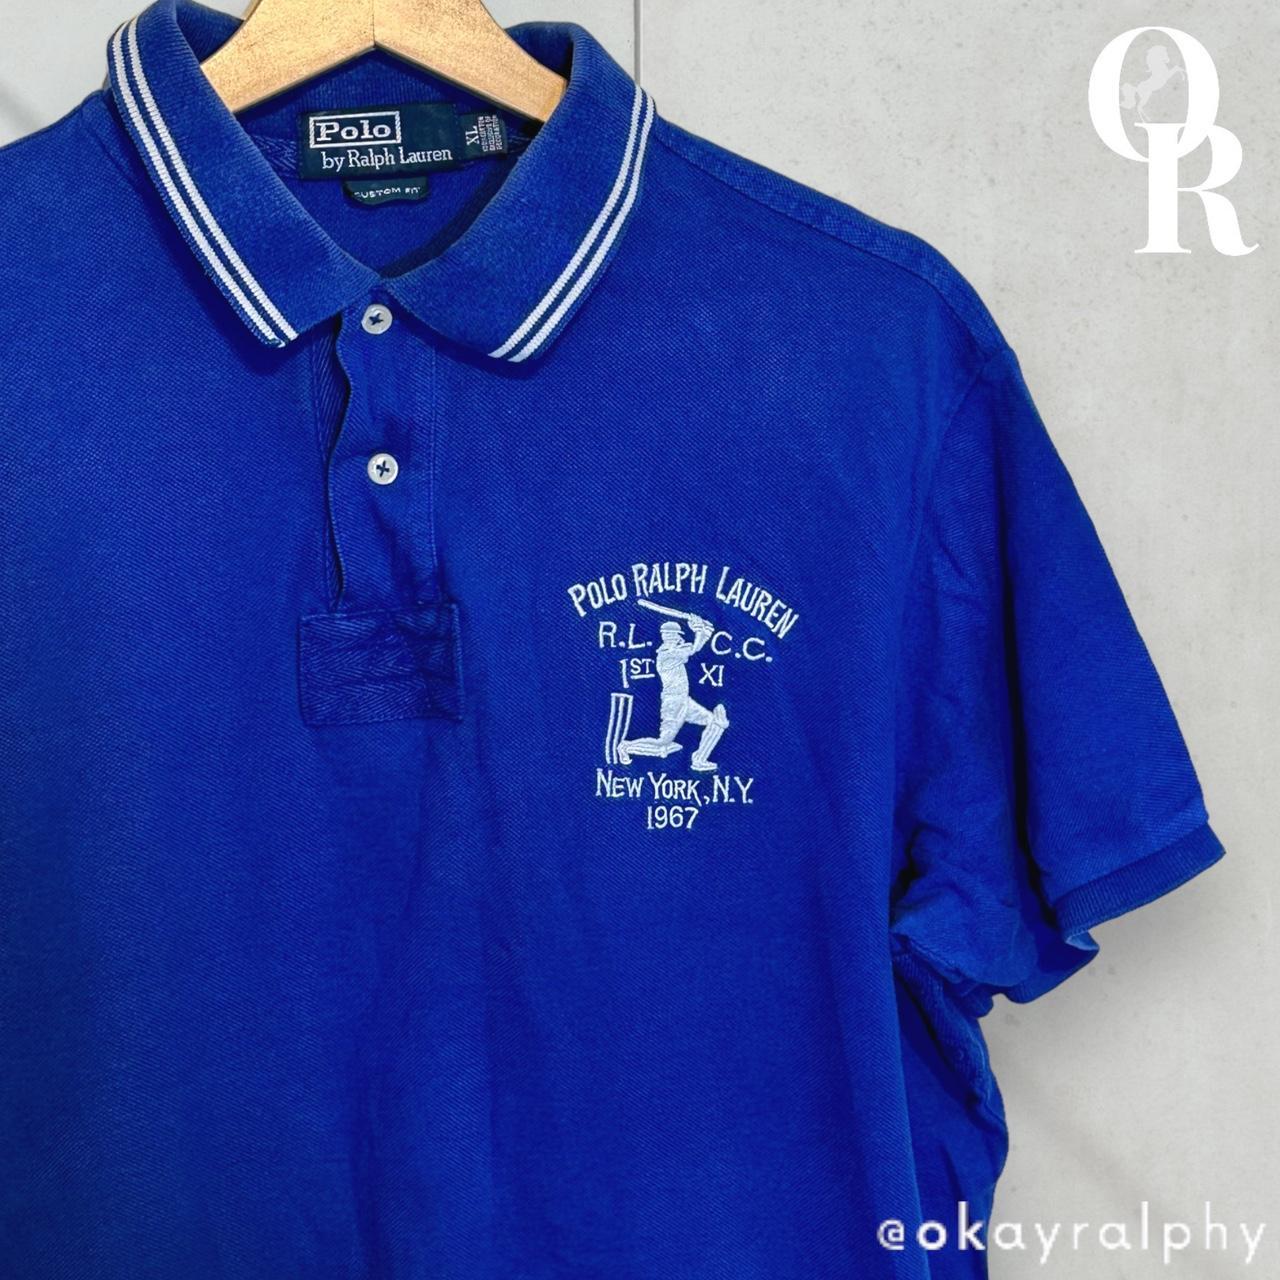 Camiseta Polo Ralph Lauren - Exclusive Edition Polo Team Brasil